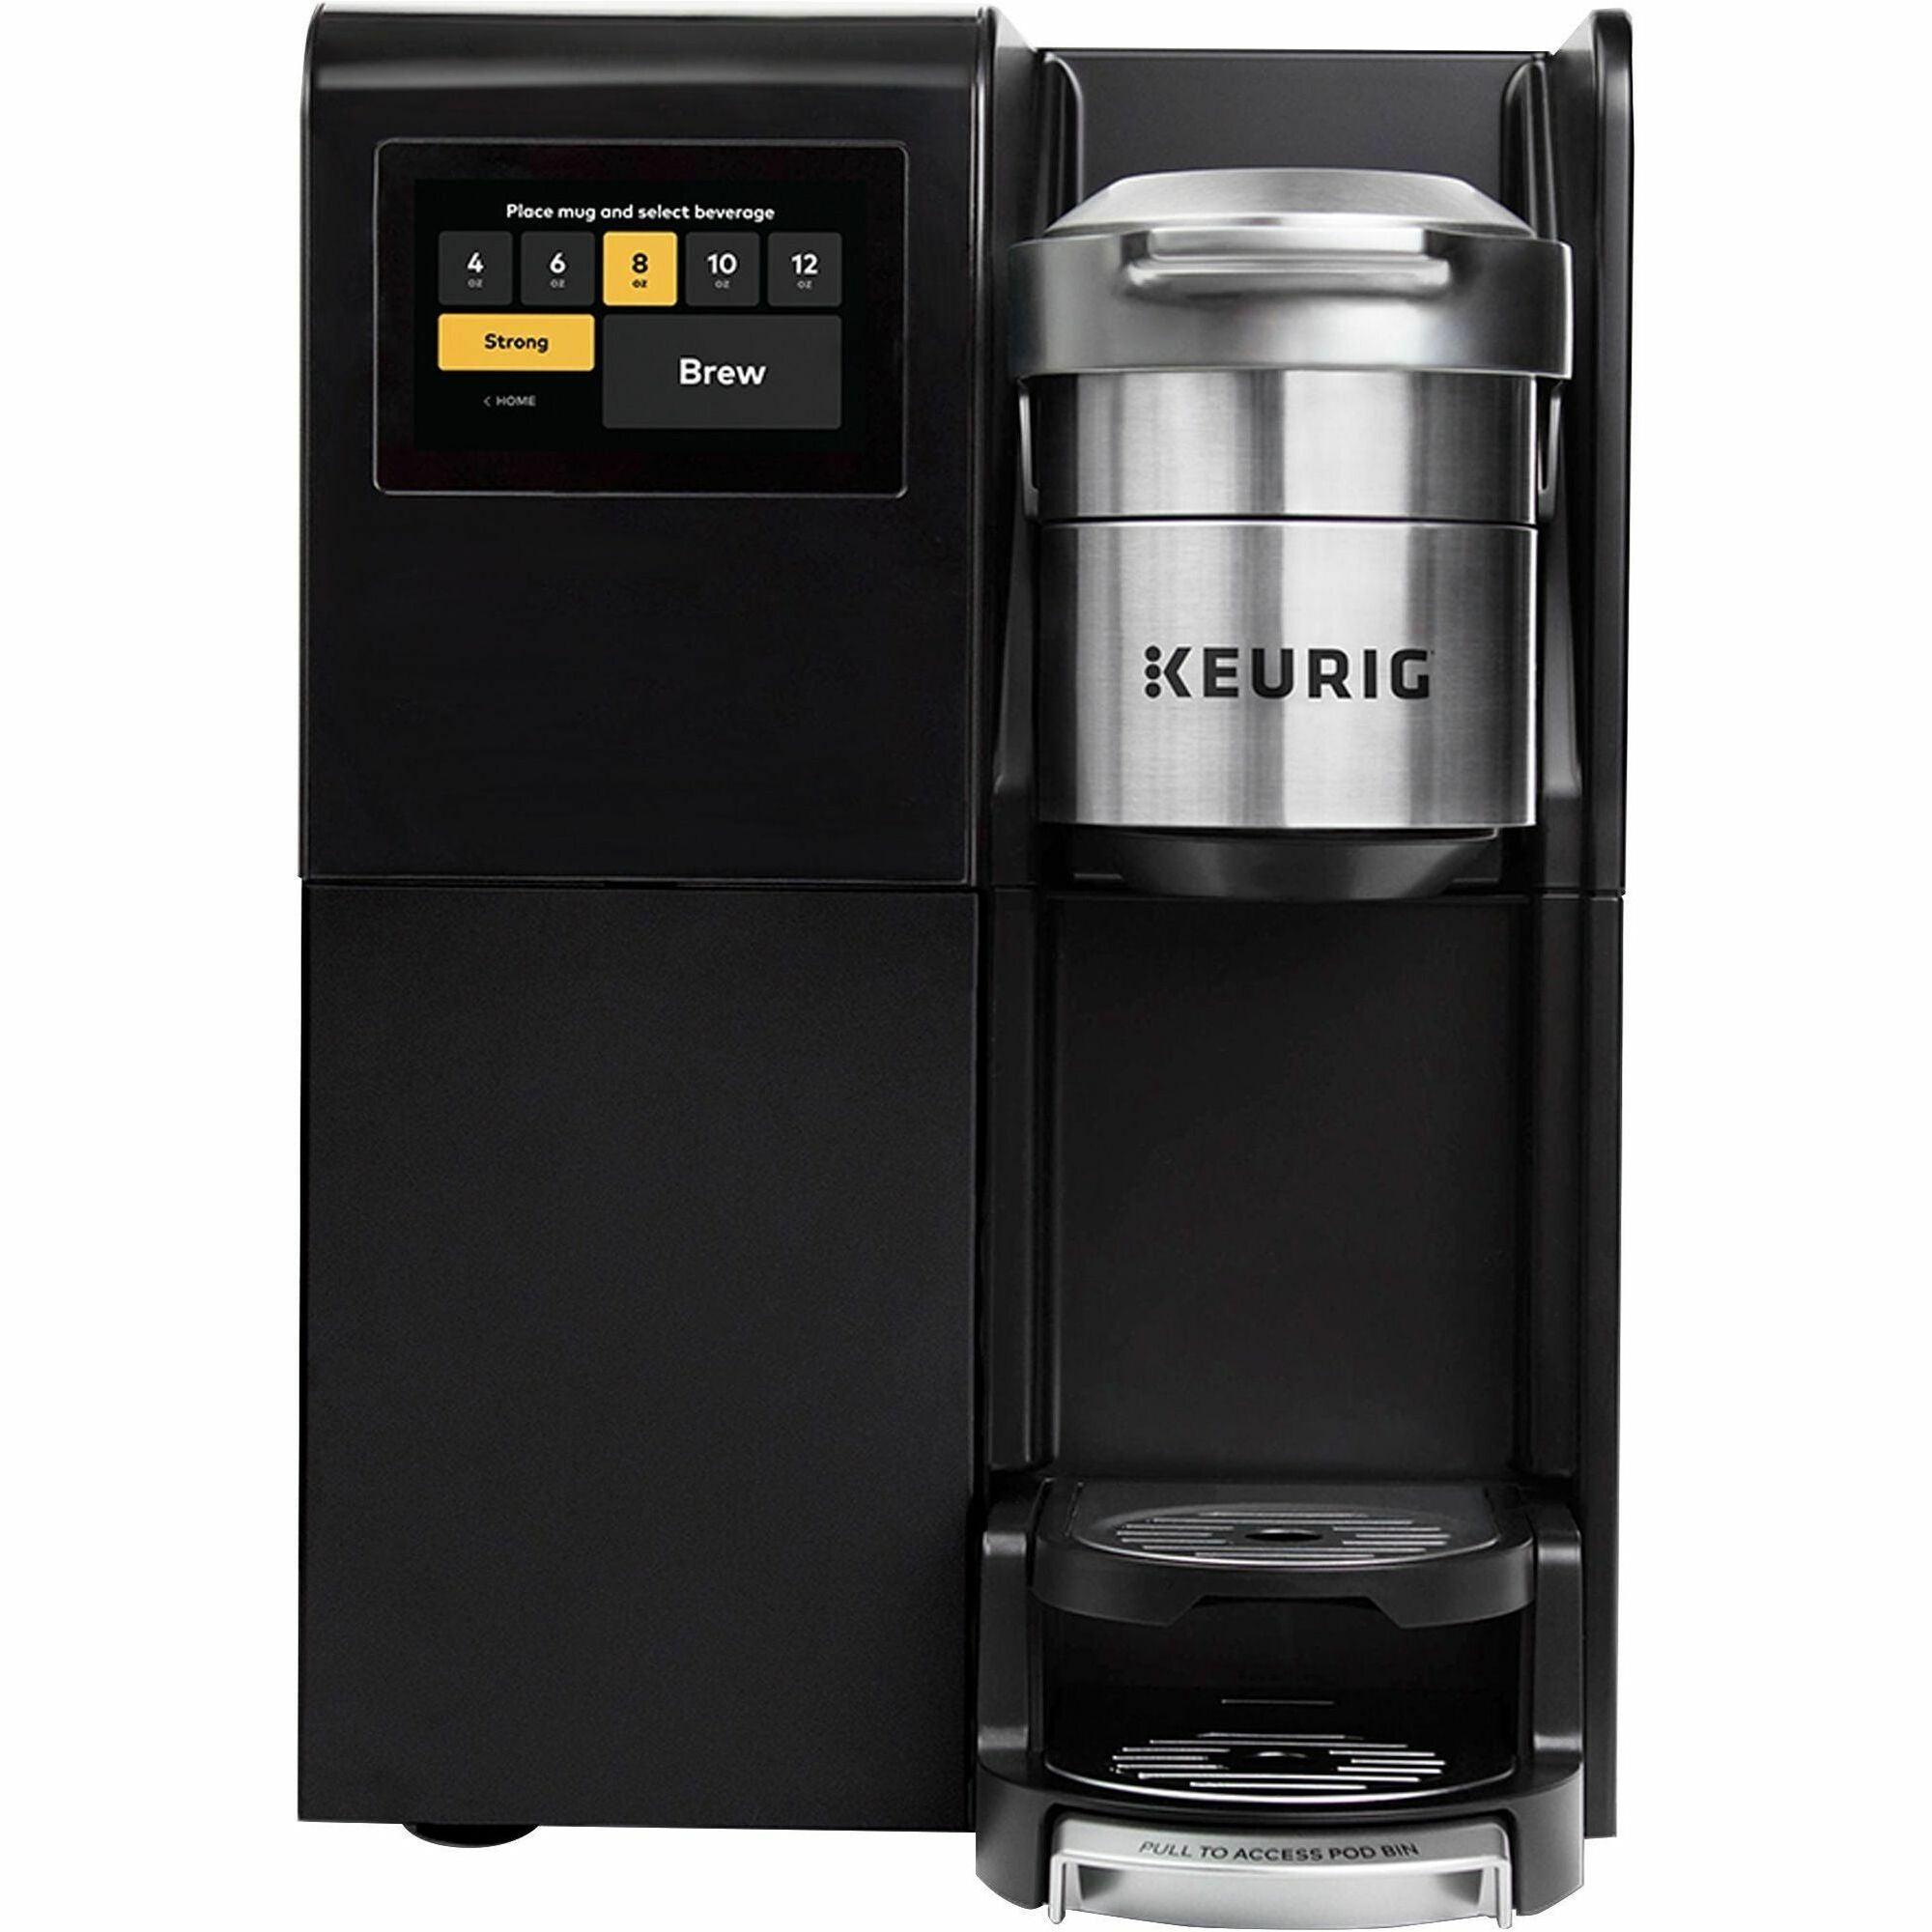 keurig-k-3500-single-serve-commercial-coffee-maker-with-premium-merchandiser-single-serve-k-cup-pod-capsule-brand-black-silver-plastic-metal-body_gmt8606 - 1